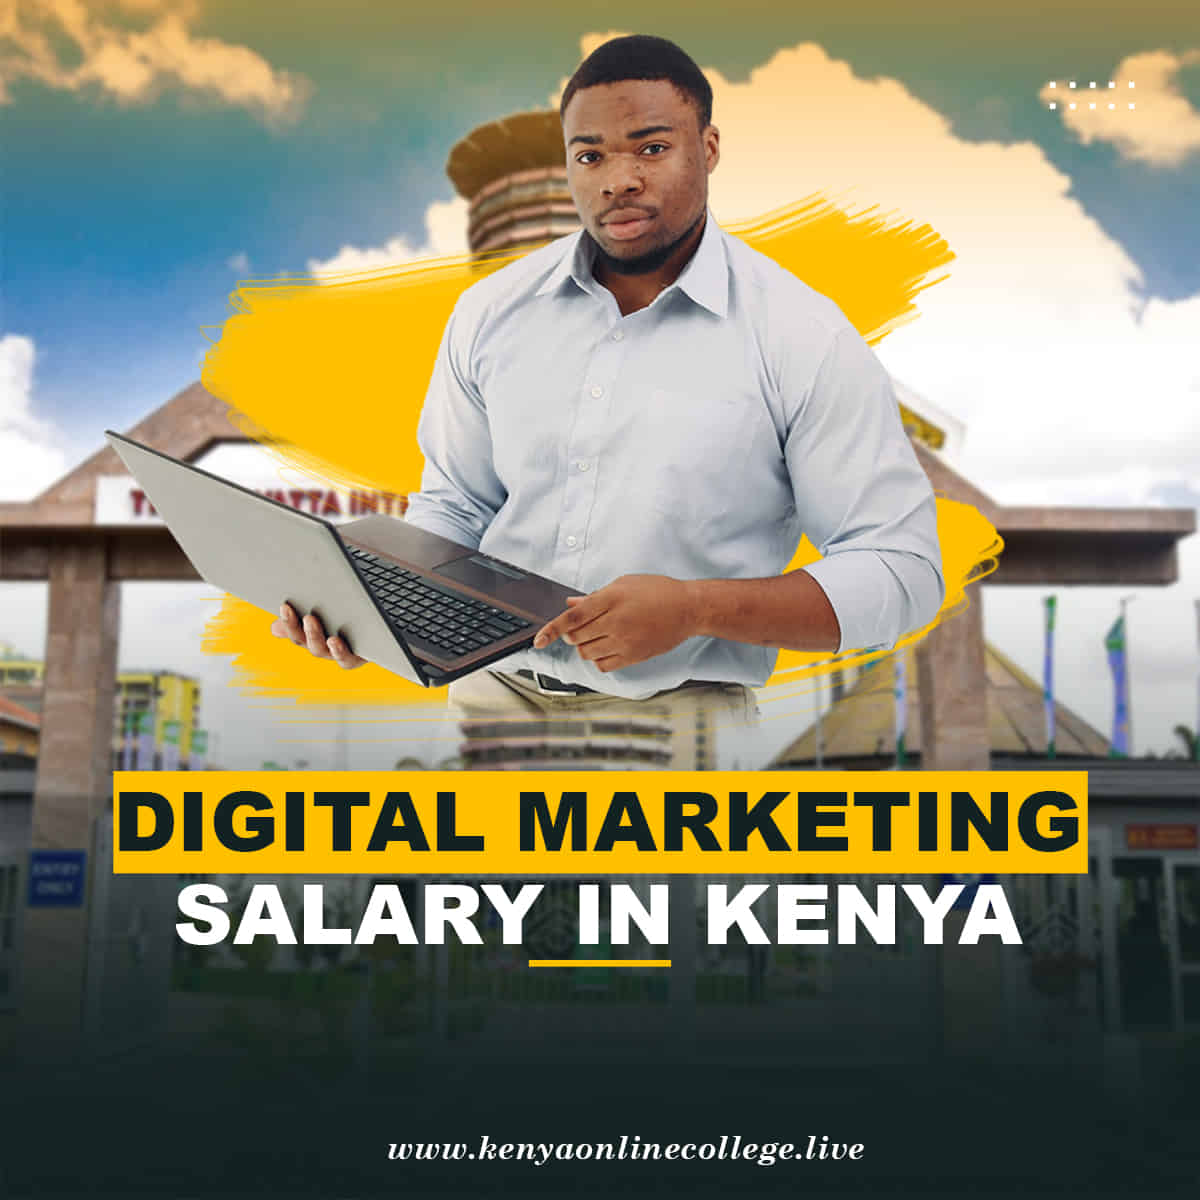 Digital marketing salary in Kenya